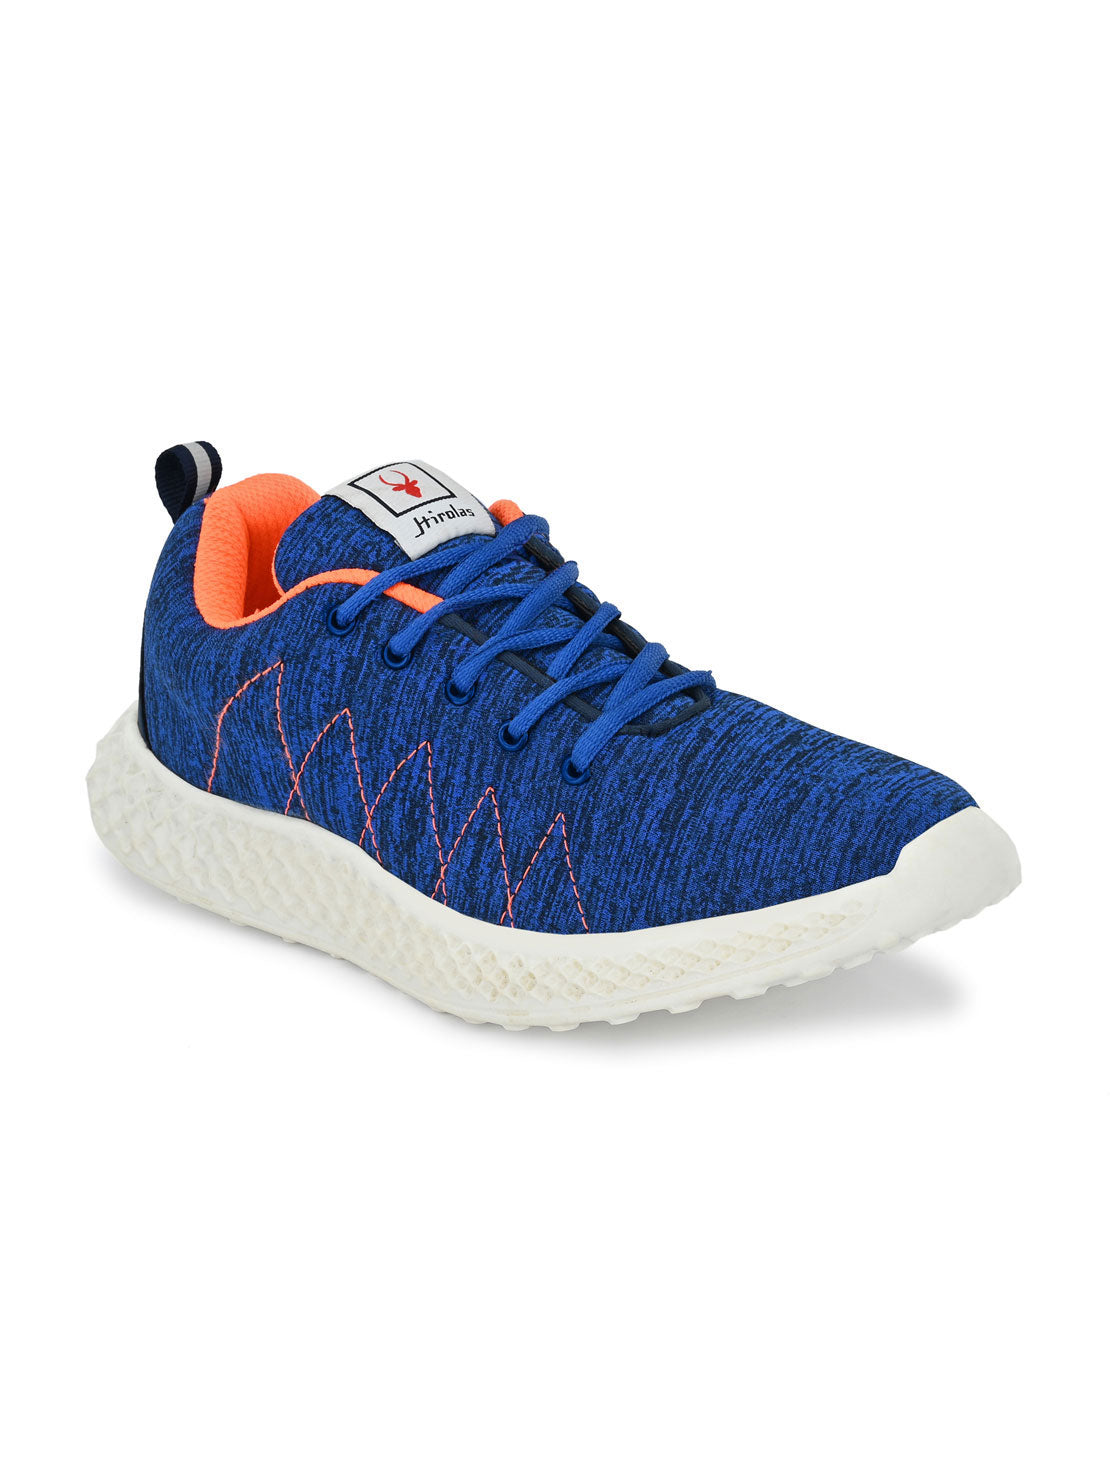 Hirolas® Men's Blue Mesh Running/Walking/Gym Lace Up Sneaker Sport Shoes (HRL2025BLU)